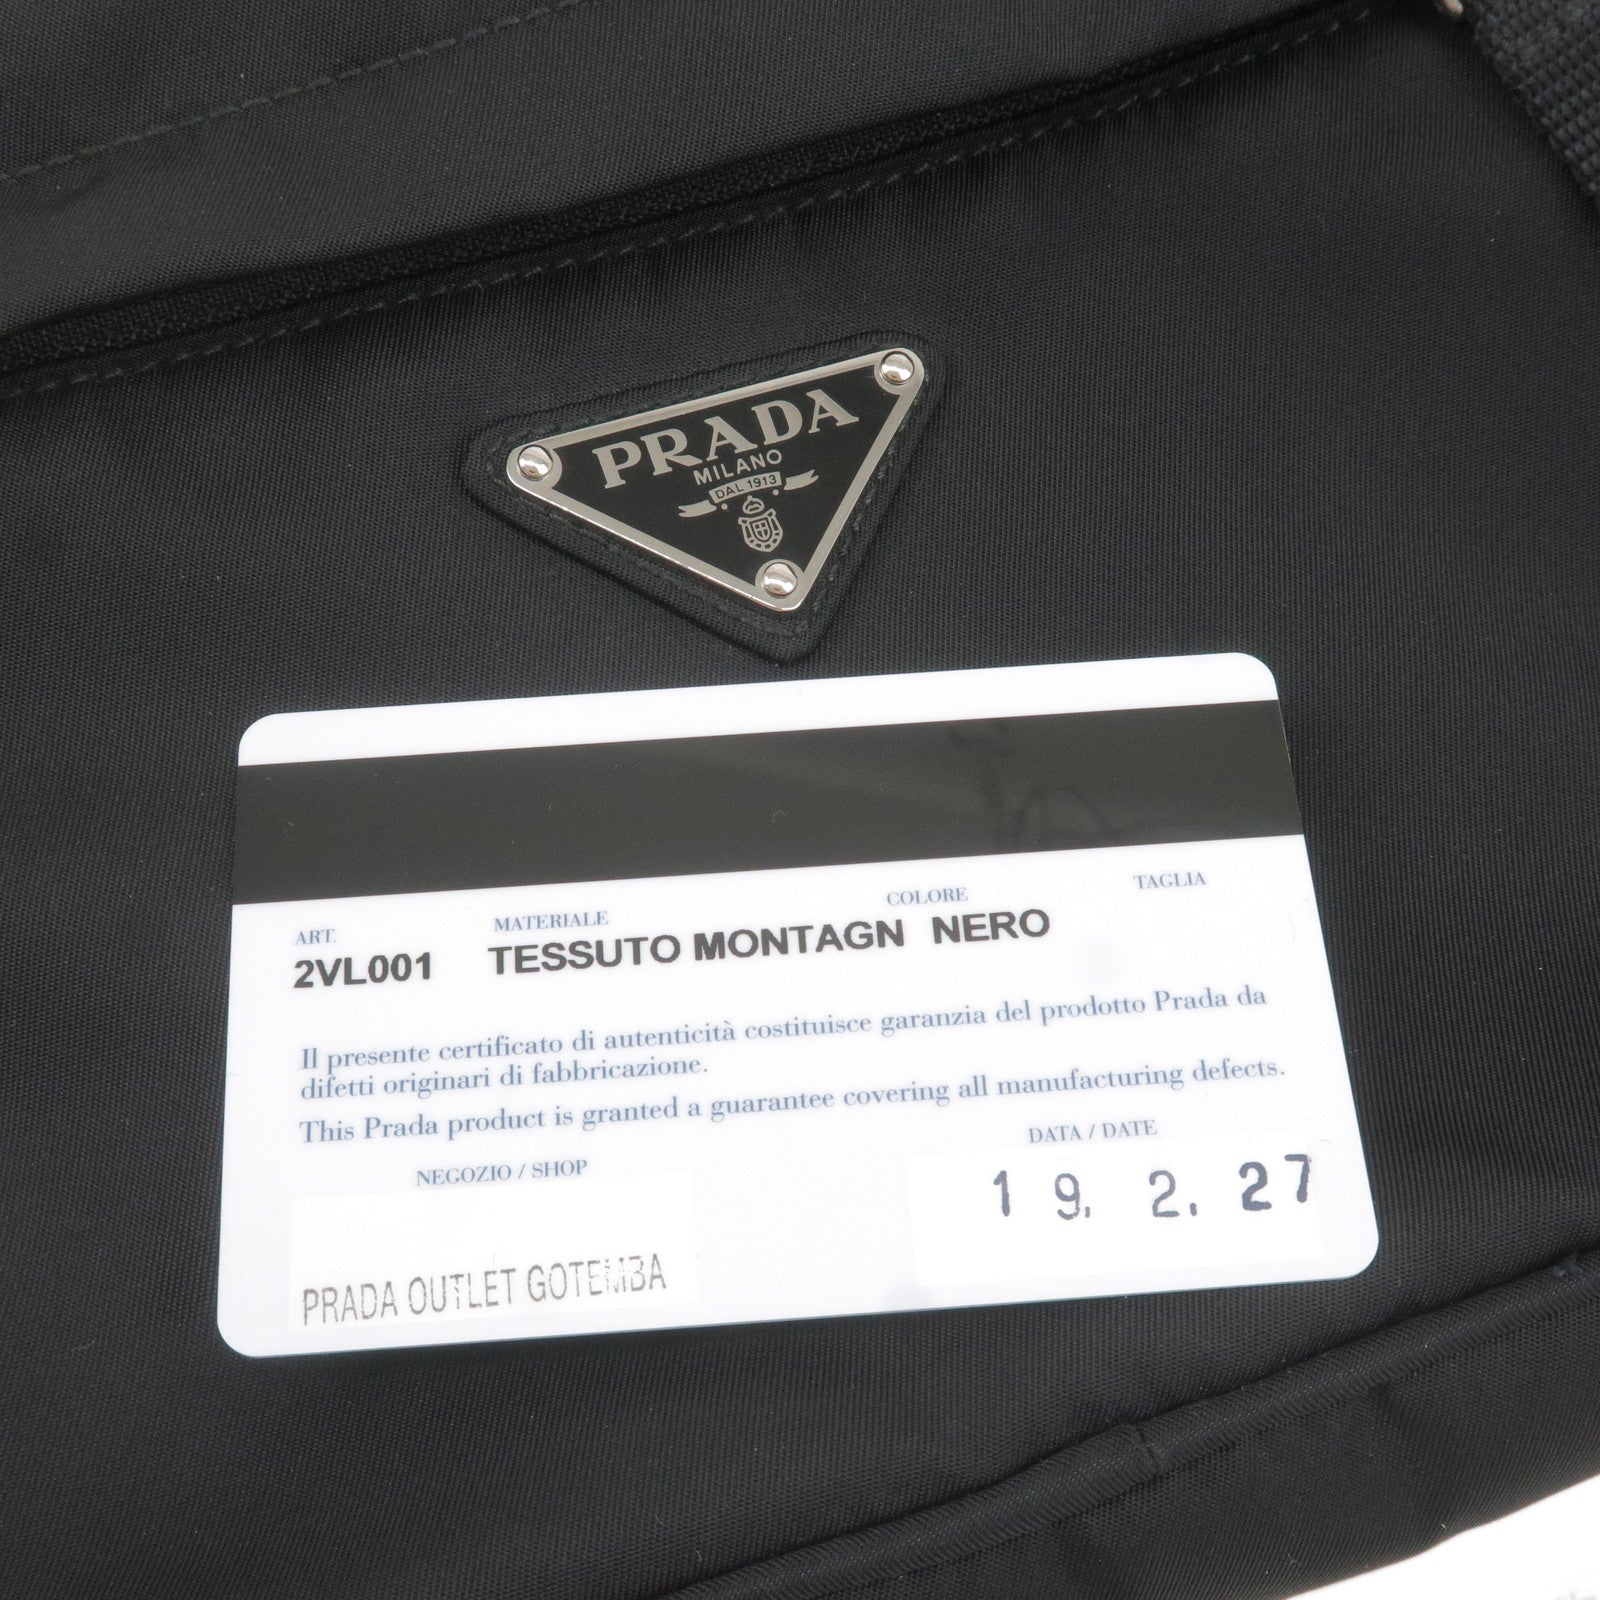 PRADA Belt Bags & Fanny Packs for Women, Authenticity Guaranteed